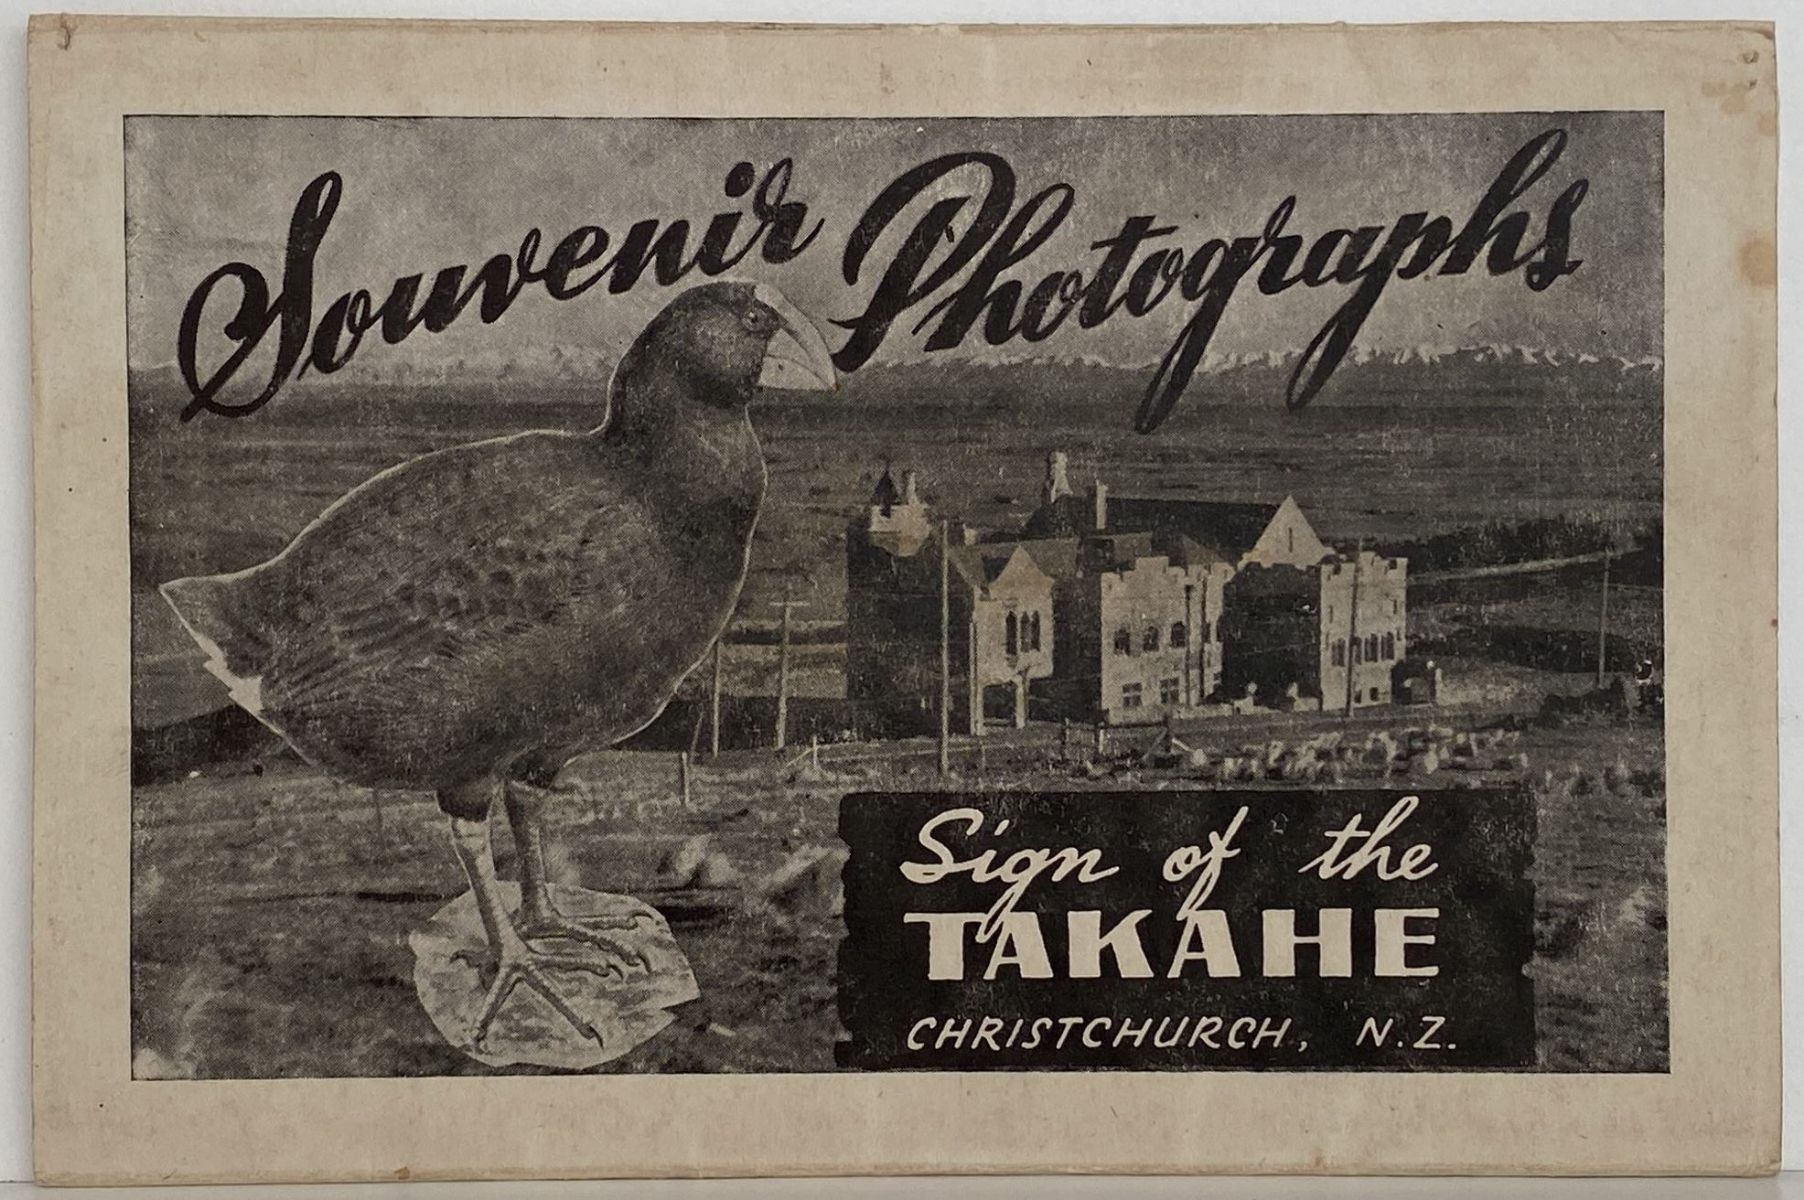 SIGN OF THE TAKAHE, Christchurch - Souvenir Photographs